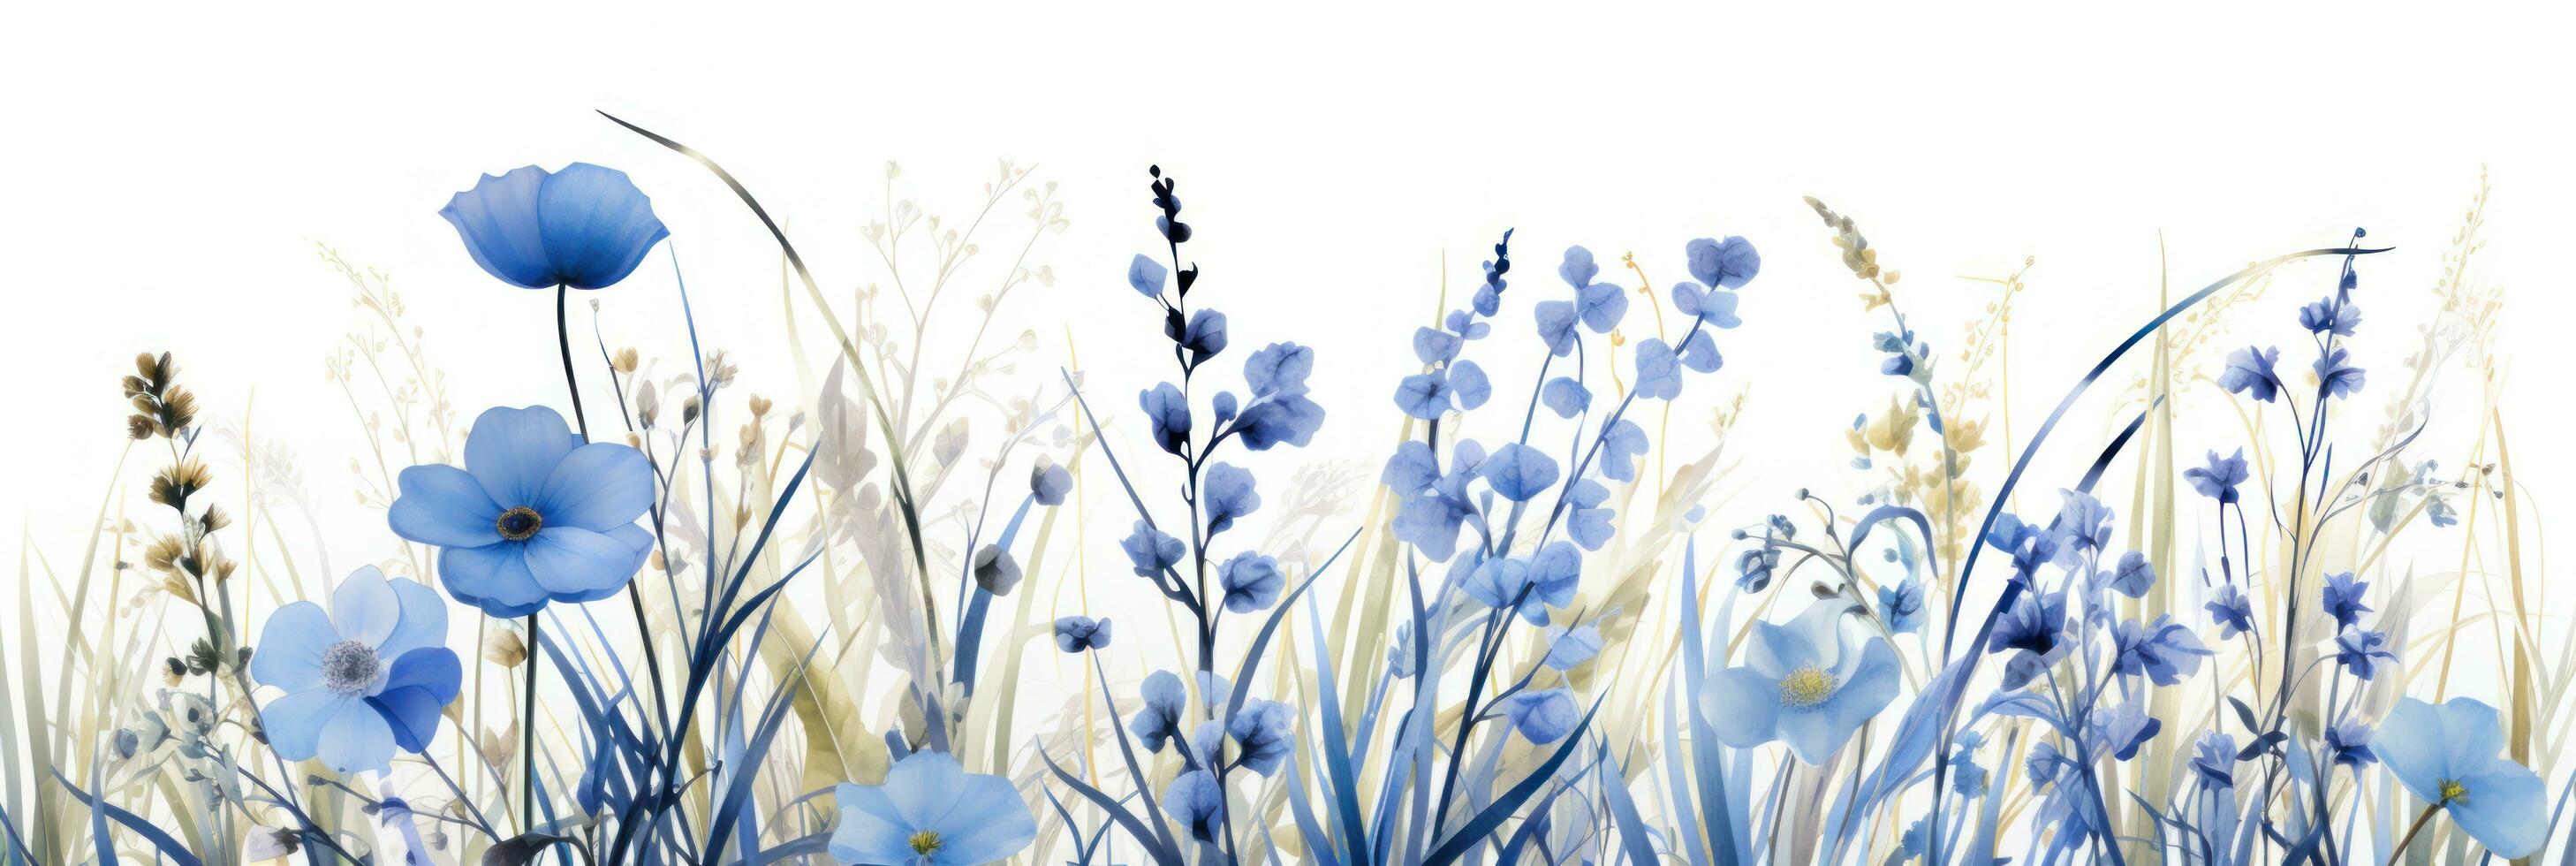 Watercolor blue flowers photo